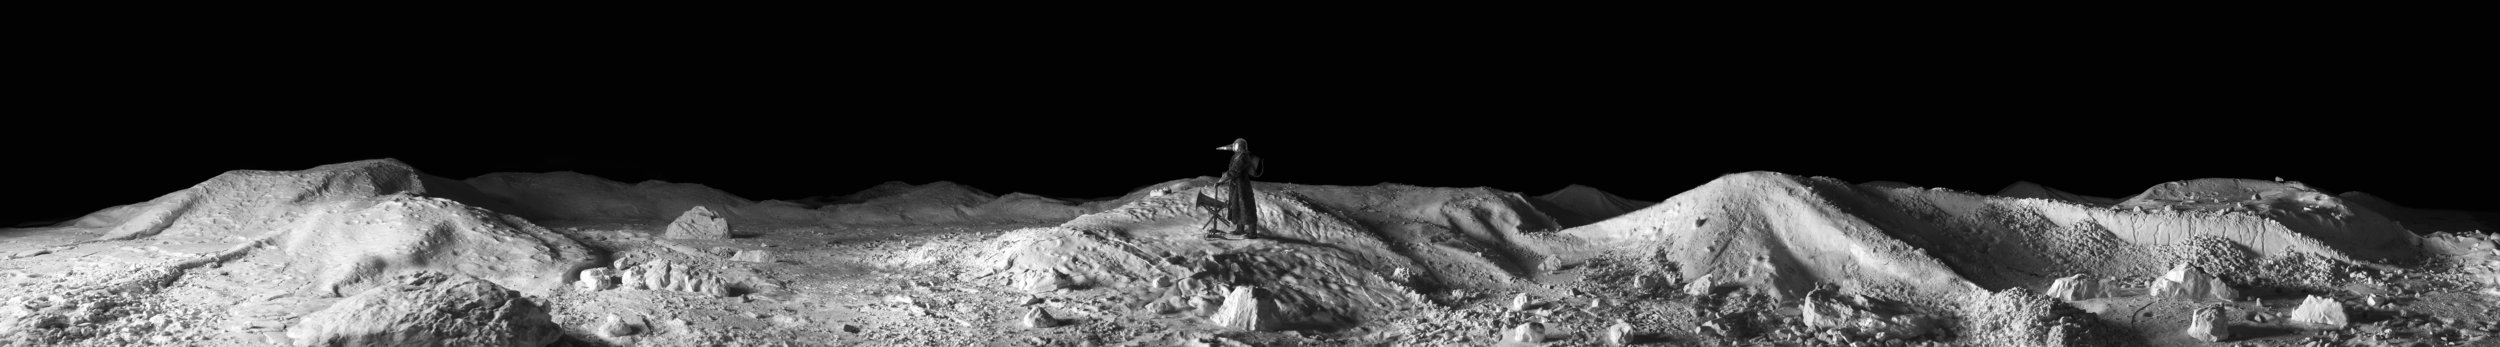 lunar wanderer c.jpg